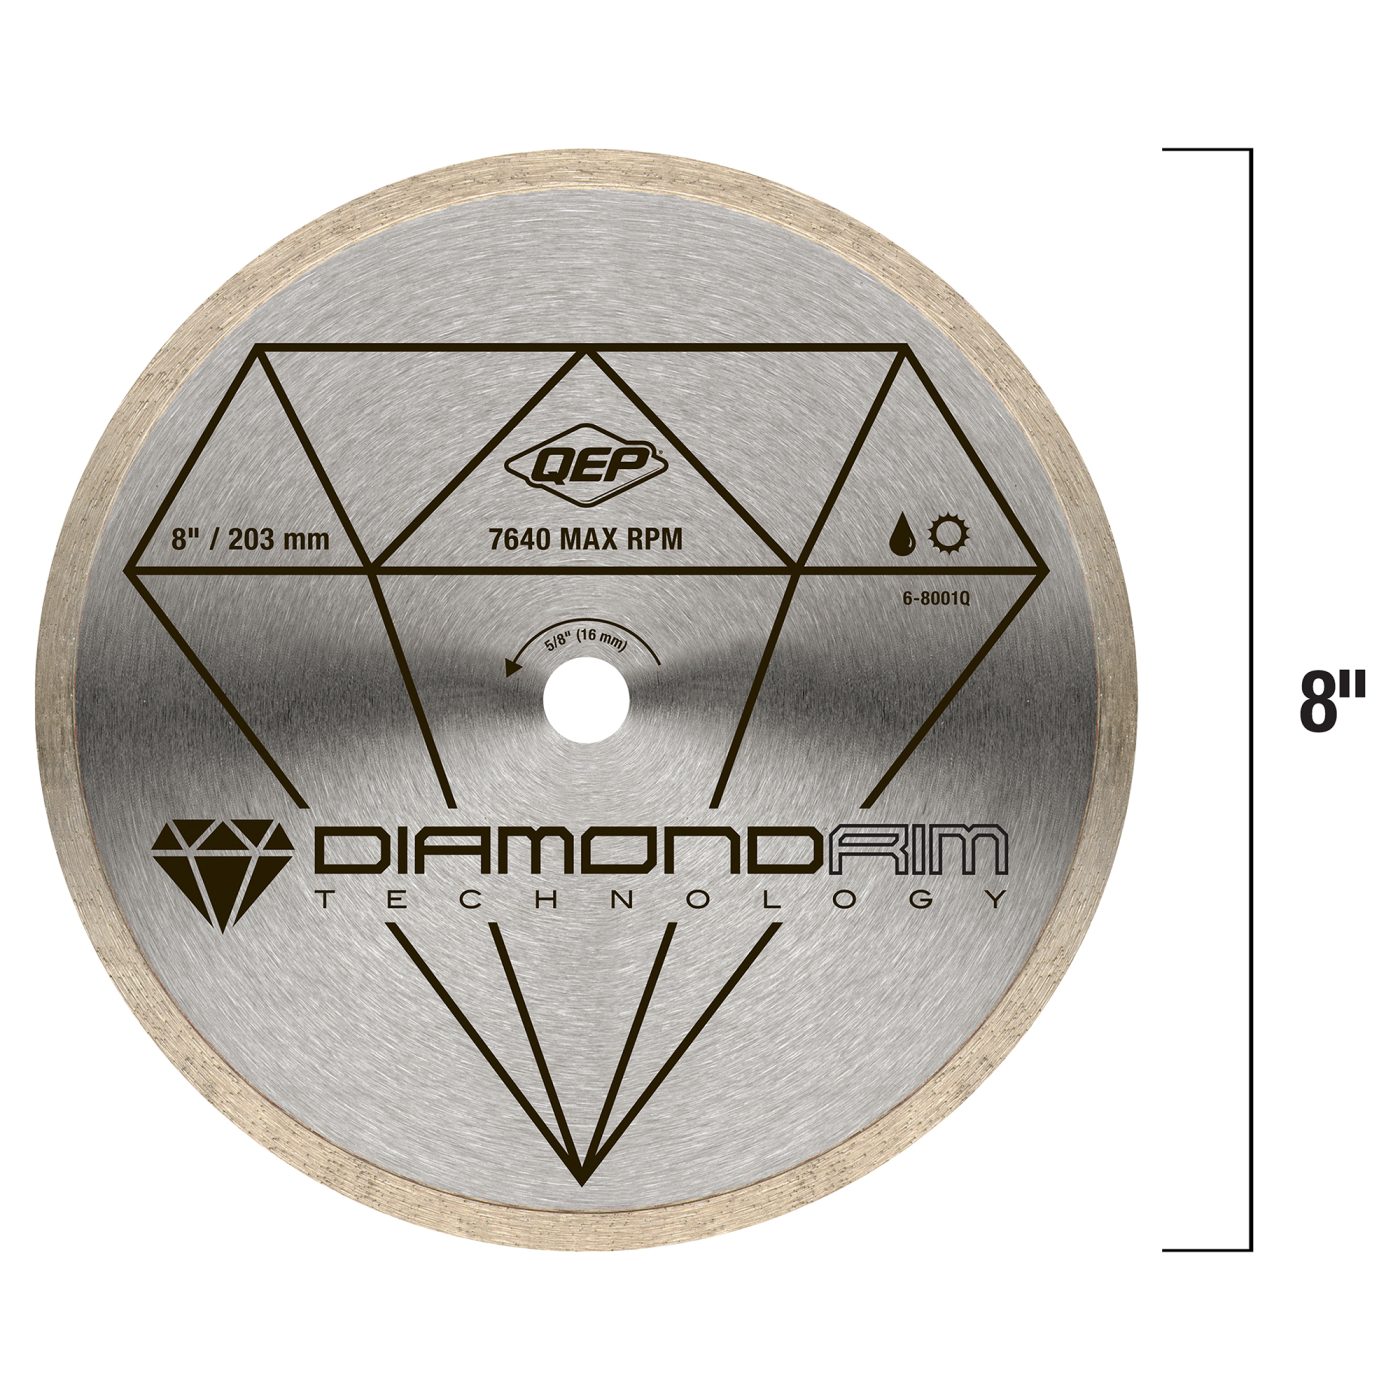 Diamond Blades - Black Series